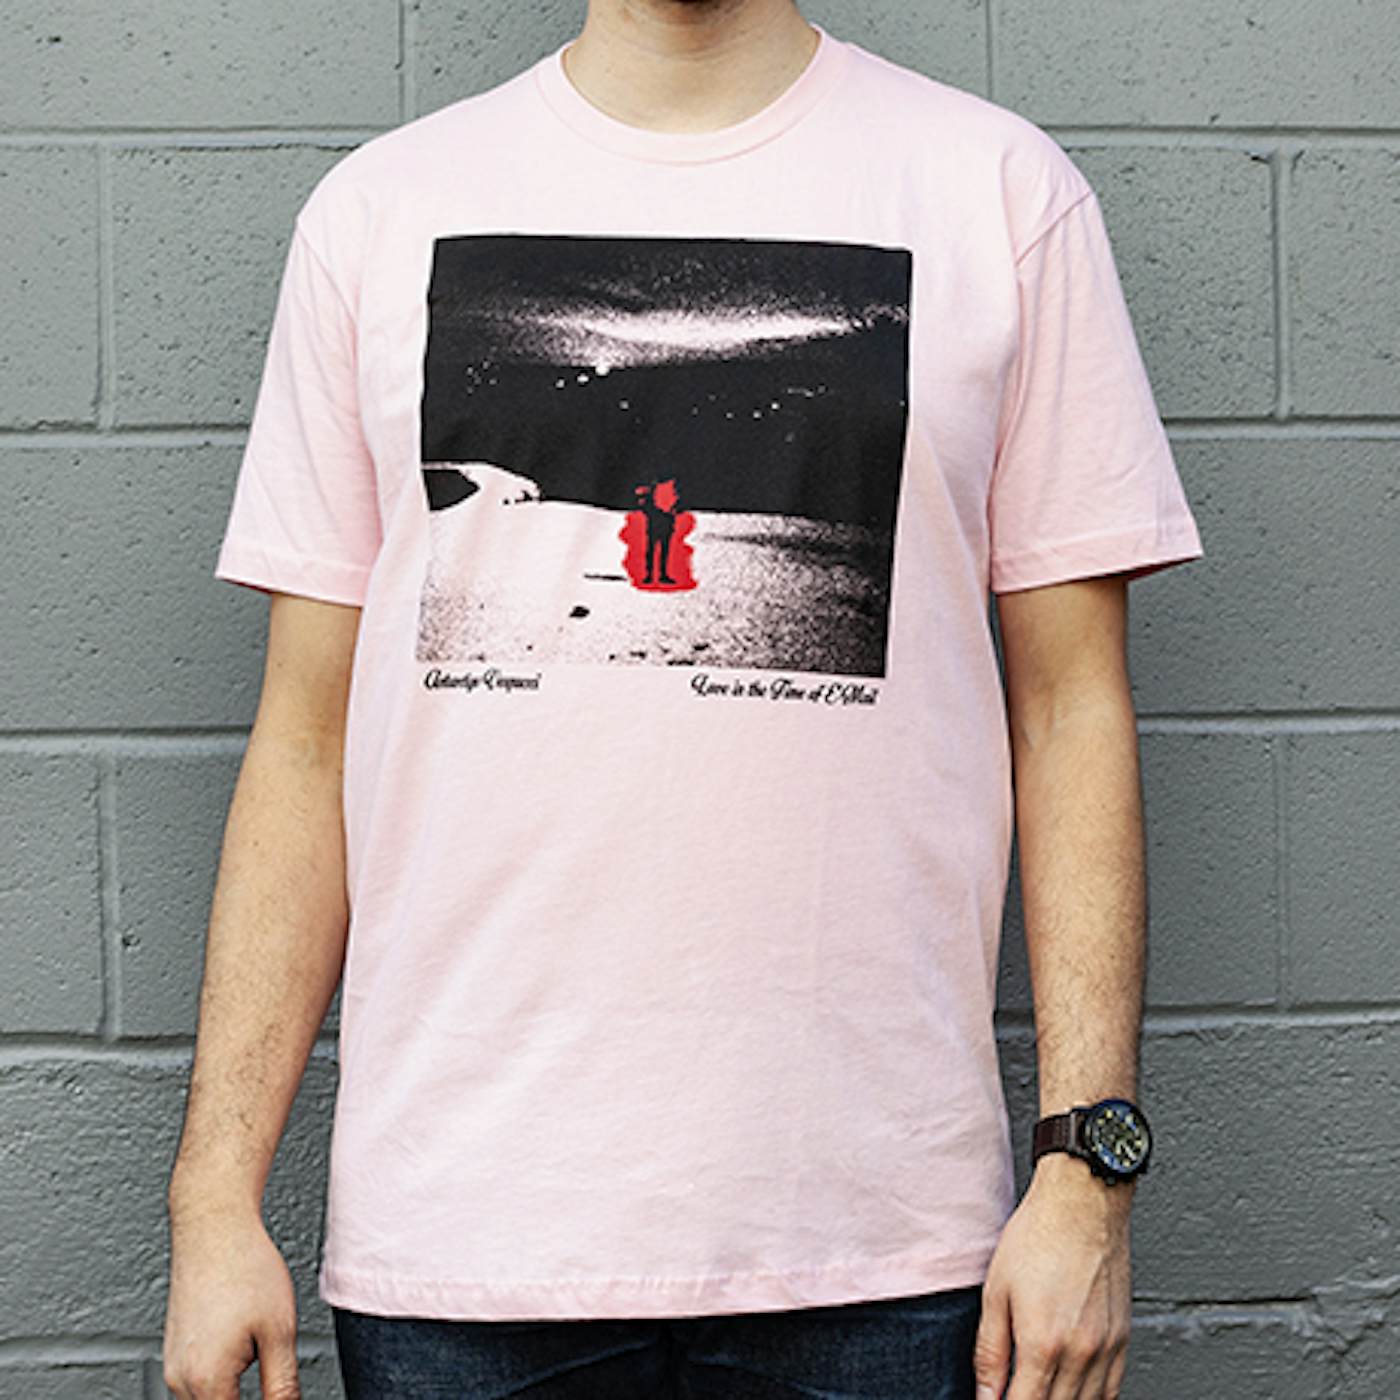 Antarctigo Vespucci Love in the Time of T-Shirts T-Shirt